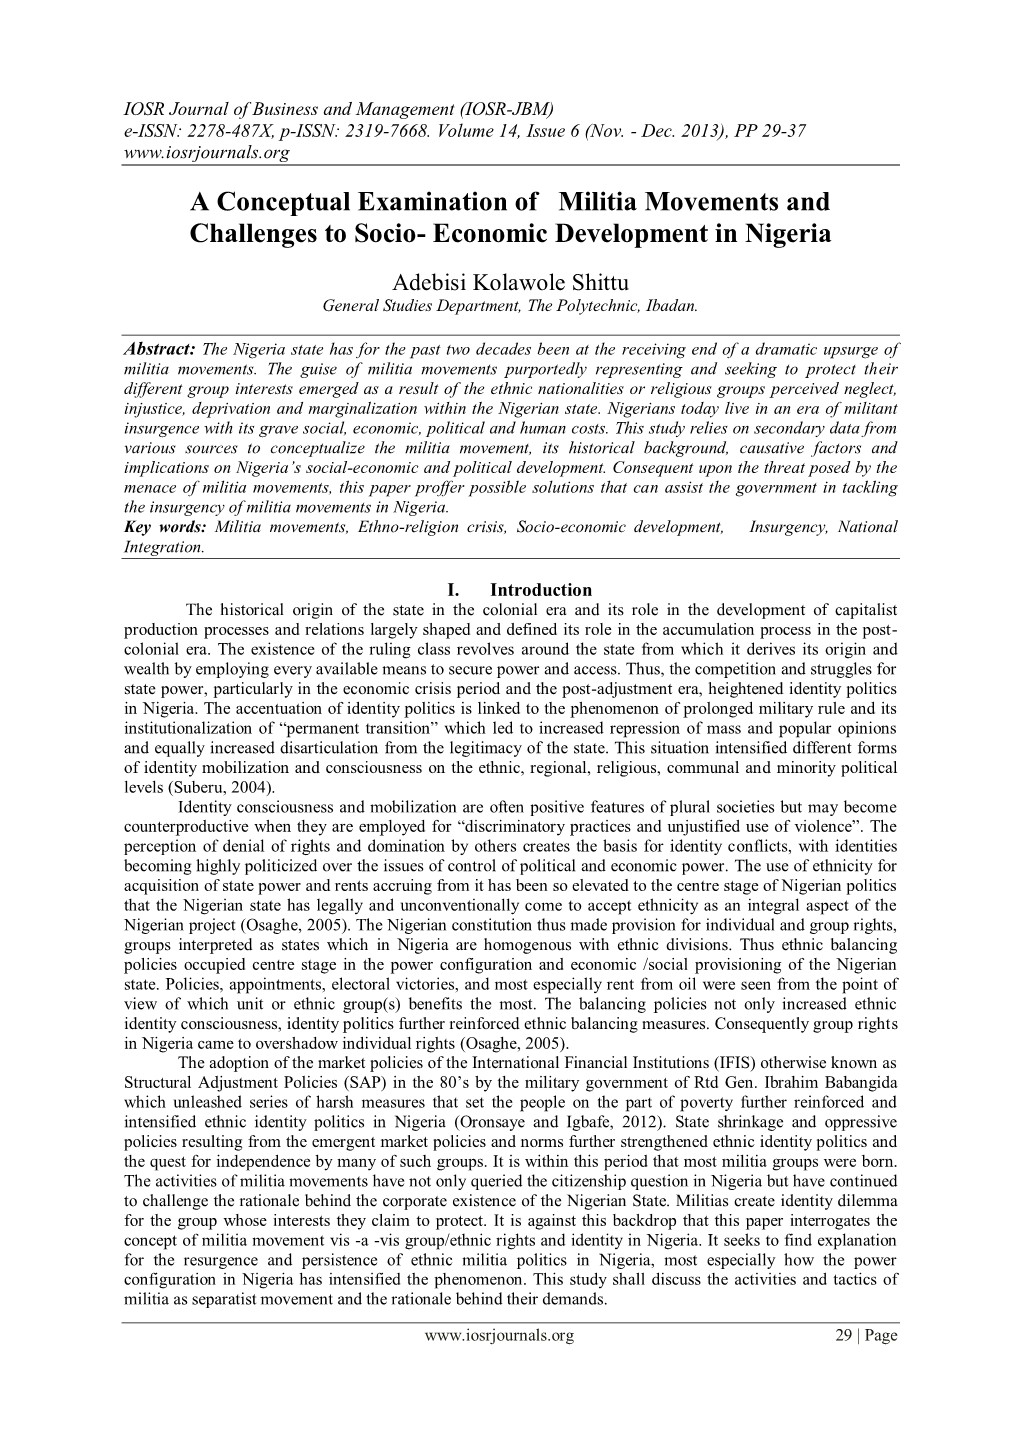 Economic Development in Nigeria